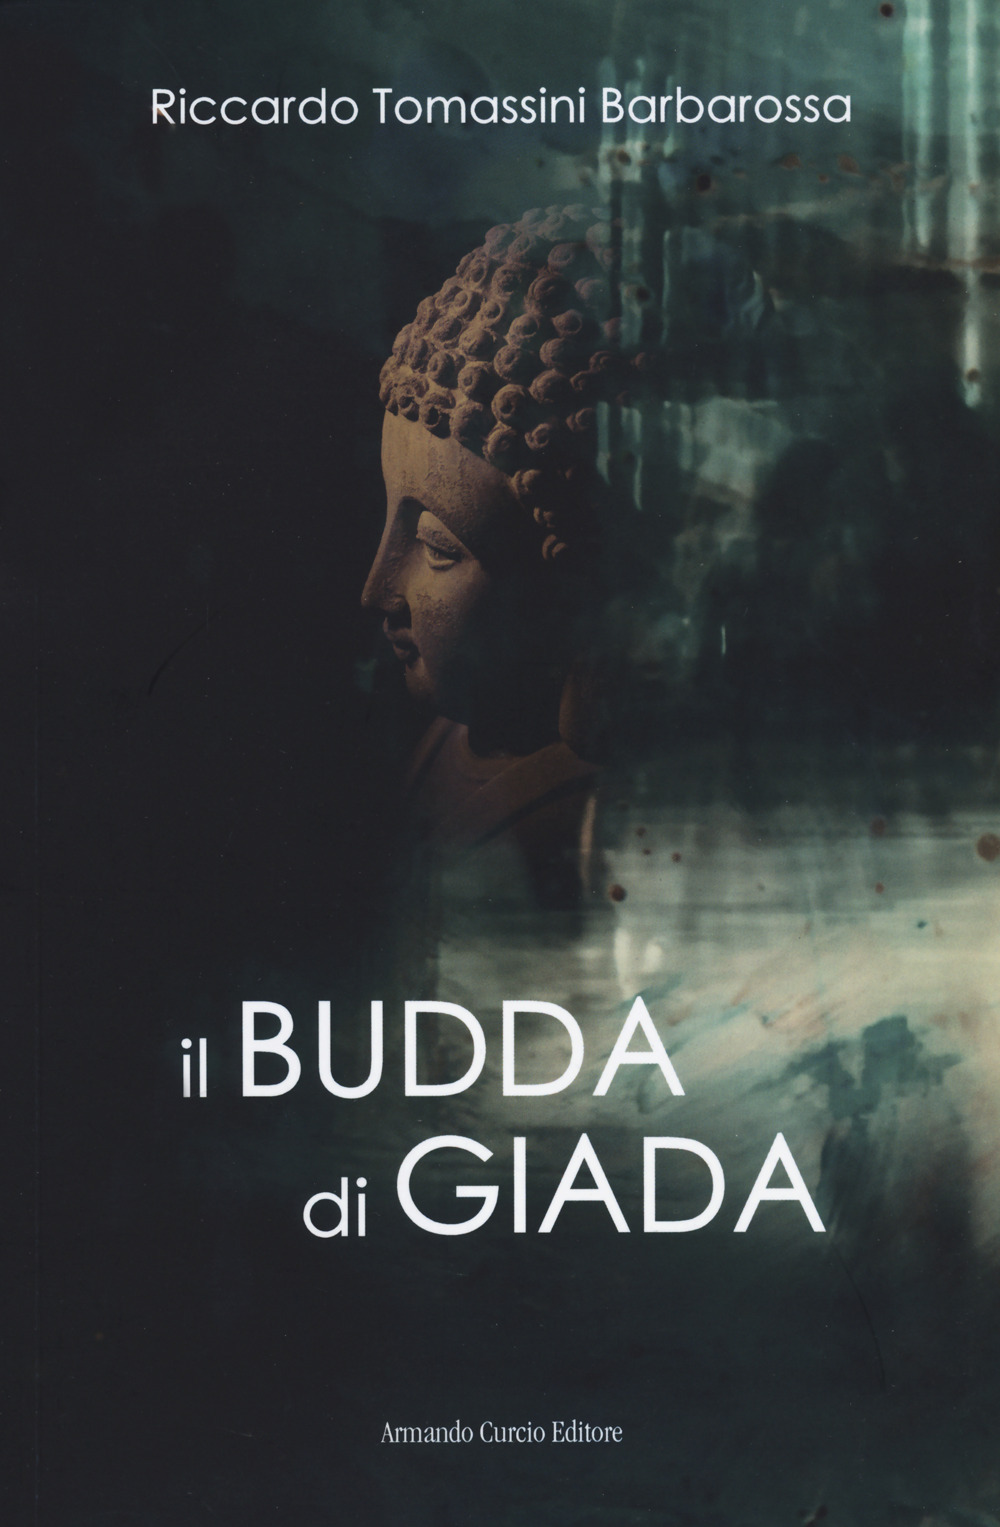 Il Budda di giada